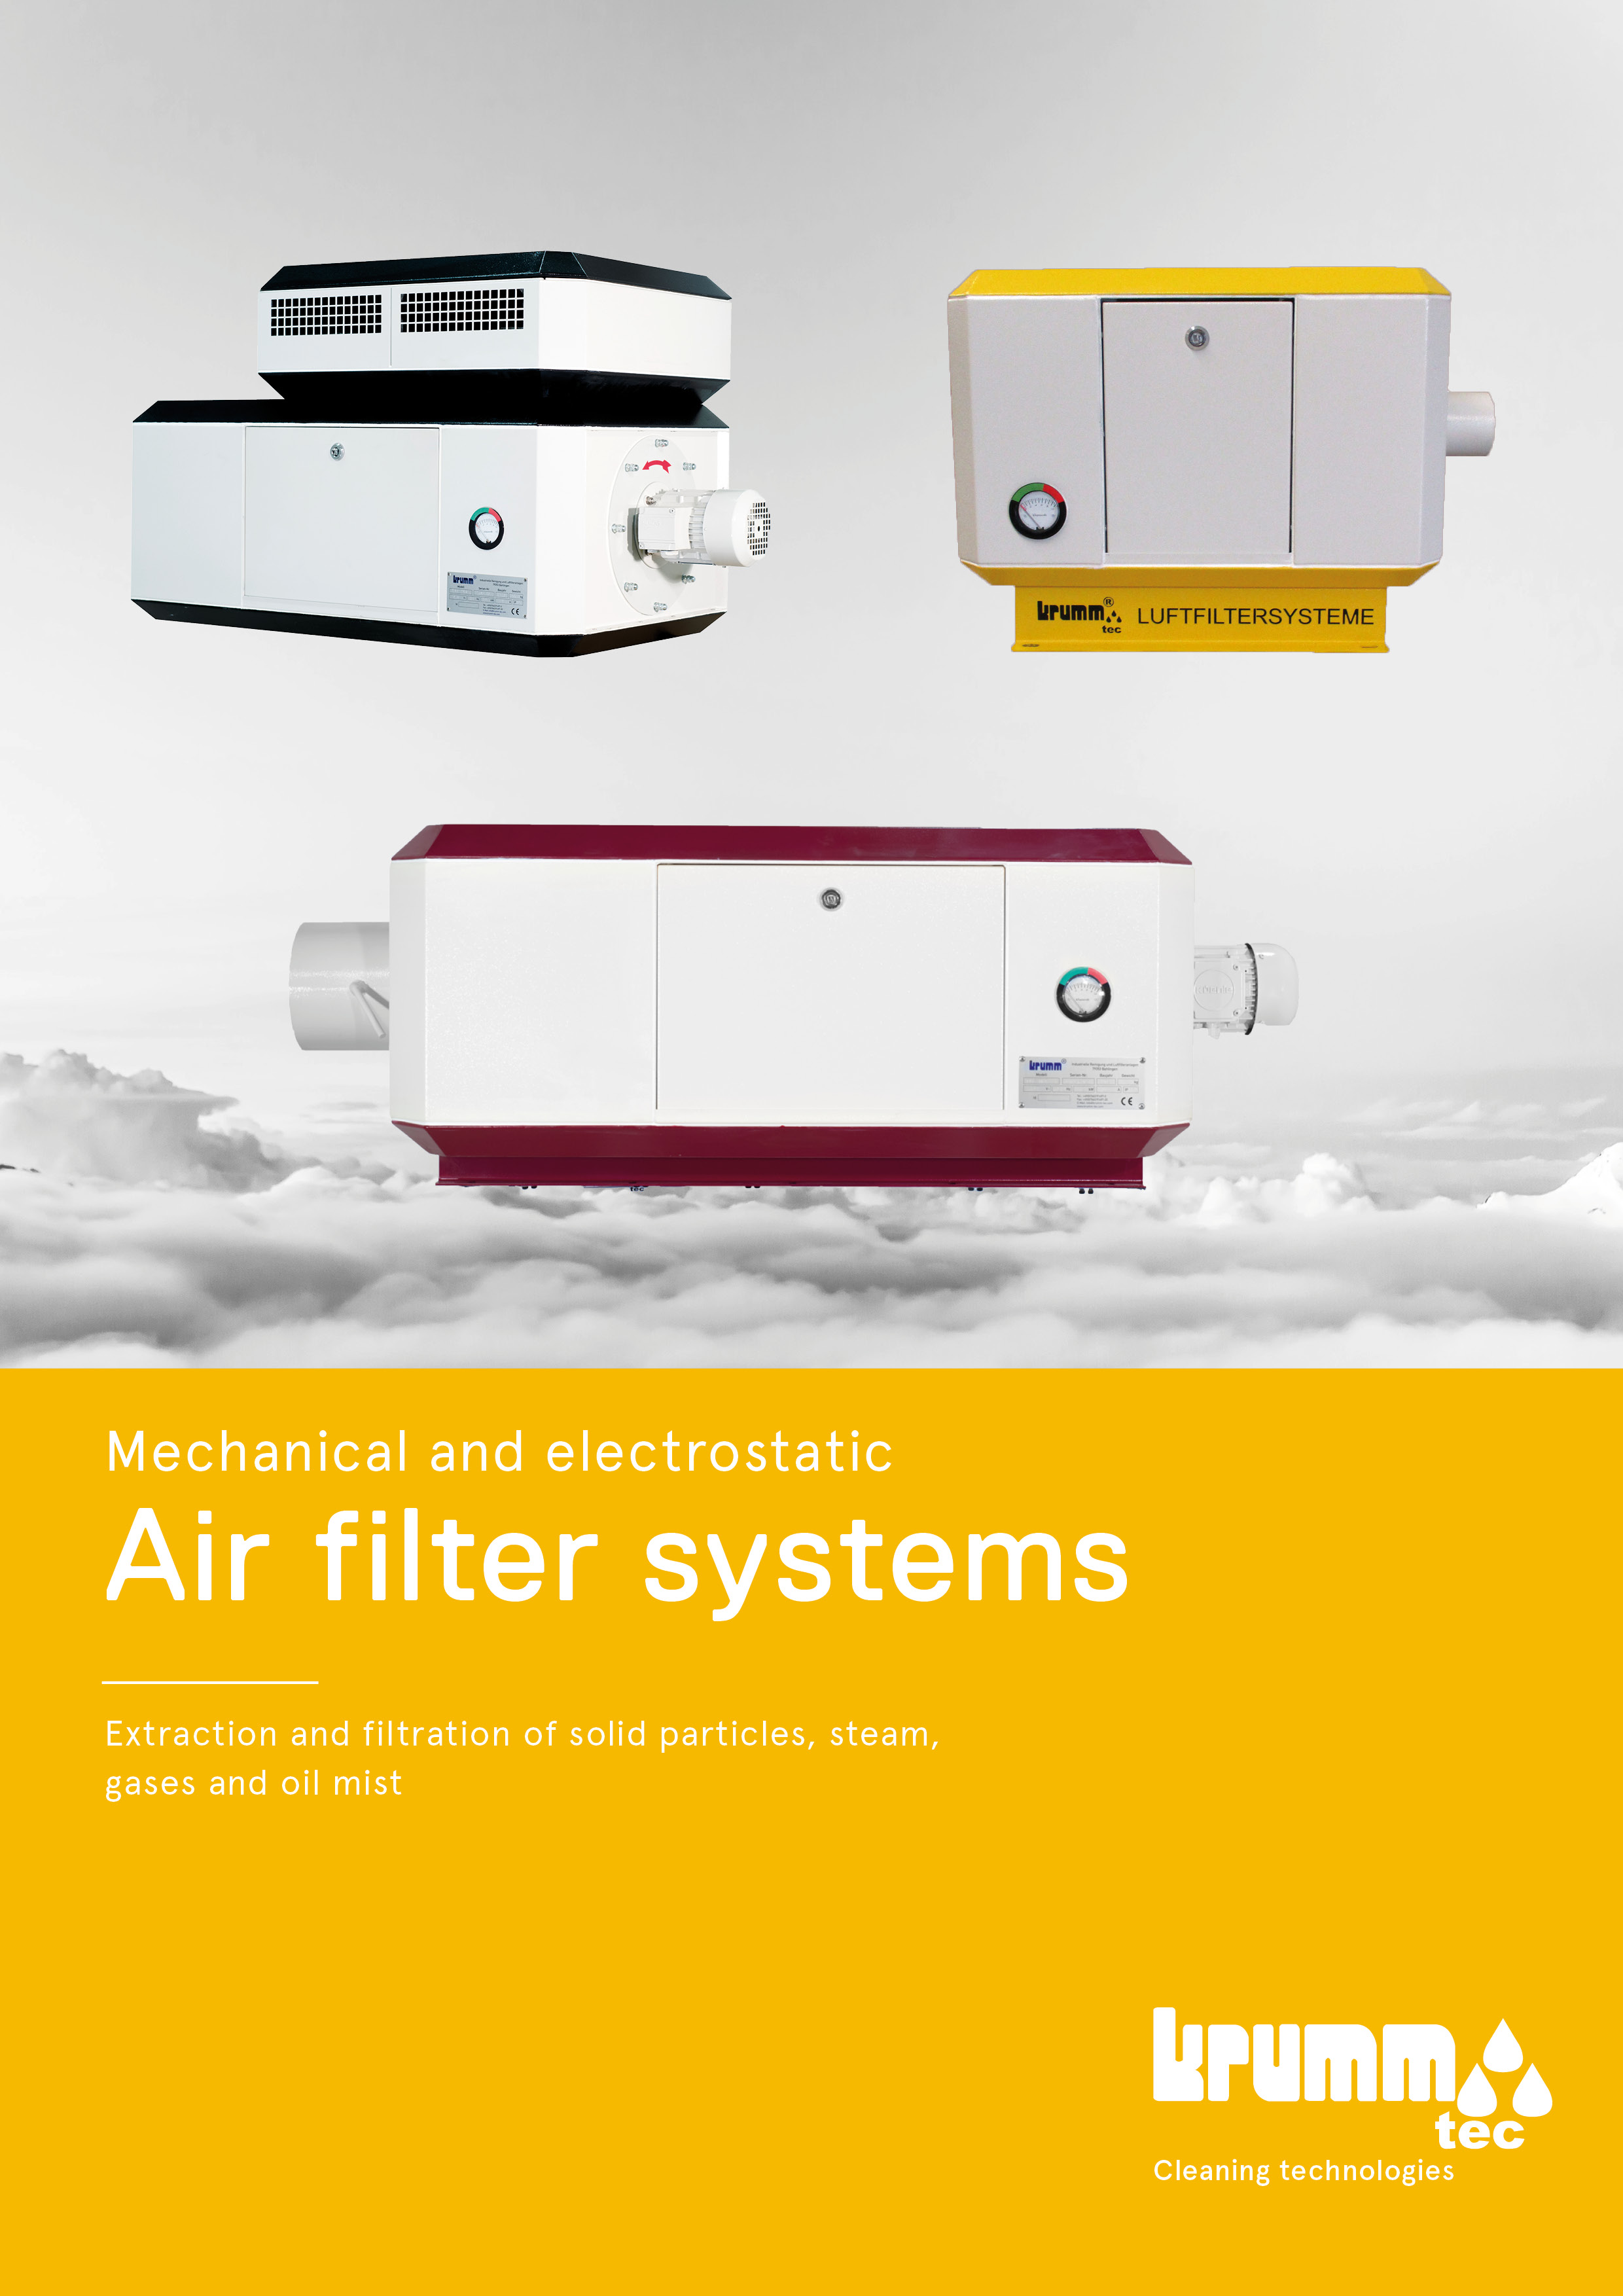 Air filter systems Krumm-tec